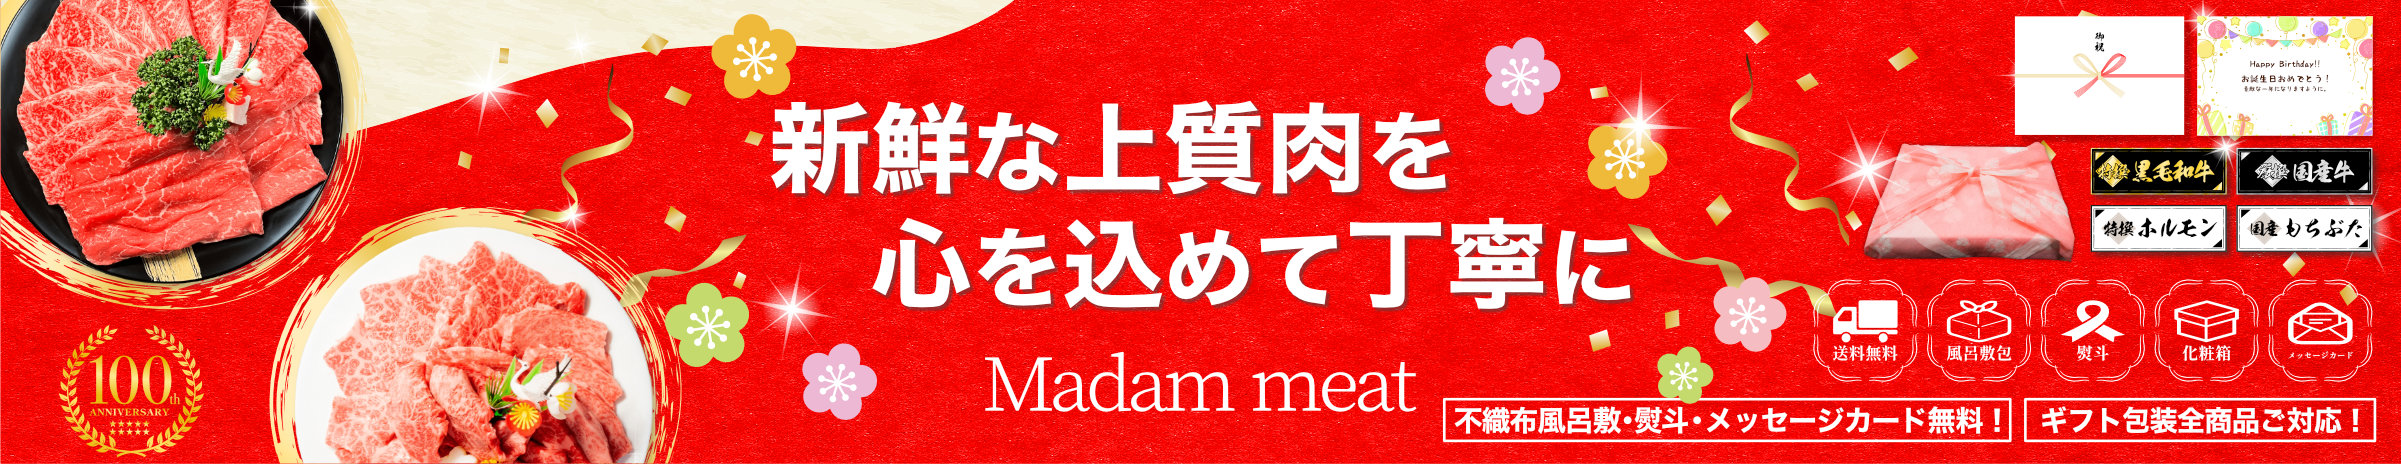 Madam meat ヘッダー画像